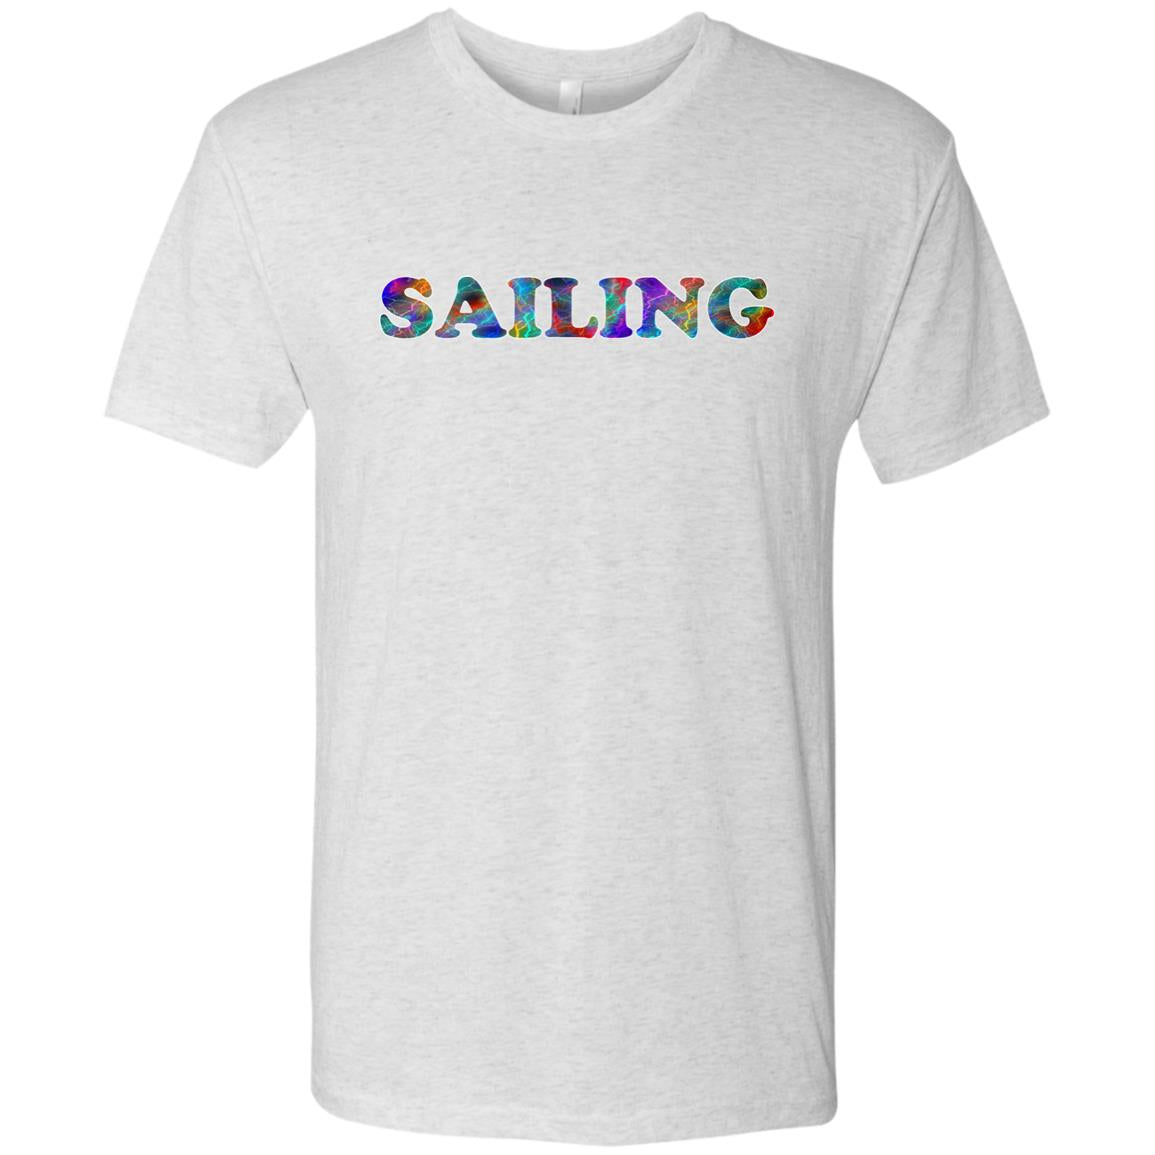 Sailing Sport T-Shirt